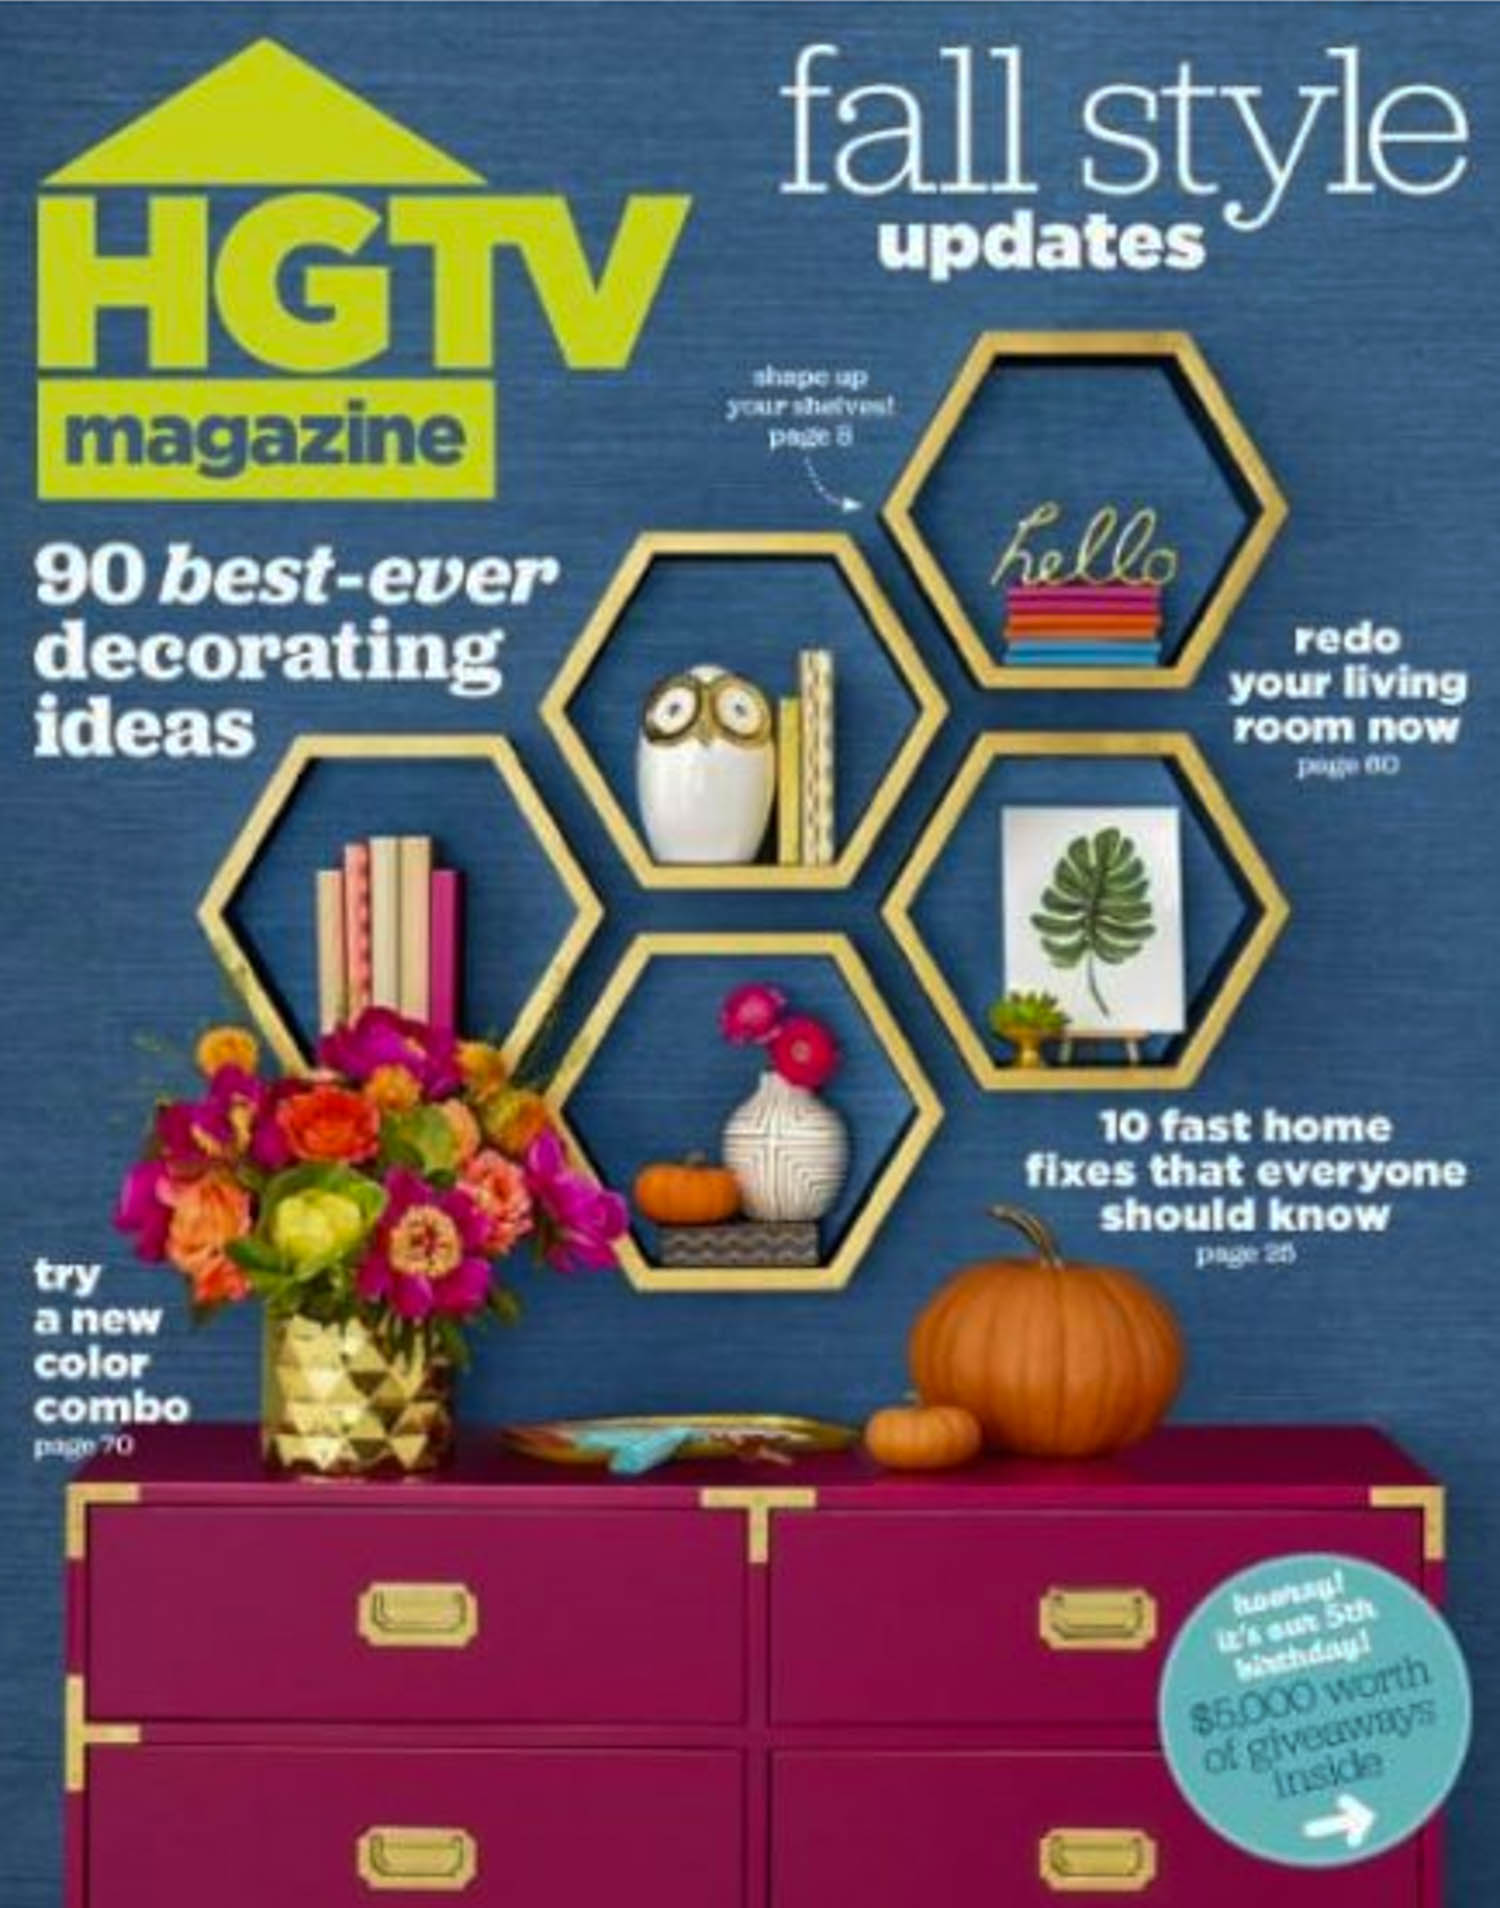 HGTV MAGAZINE OCTOBER 2016 ISSUE, PAGE 153 BEAUTIFUL INGREDIENT NAPKINS